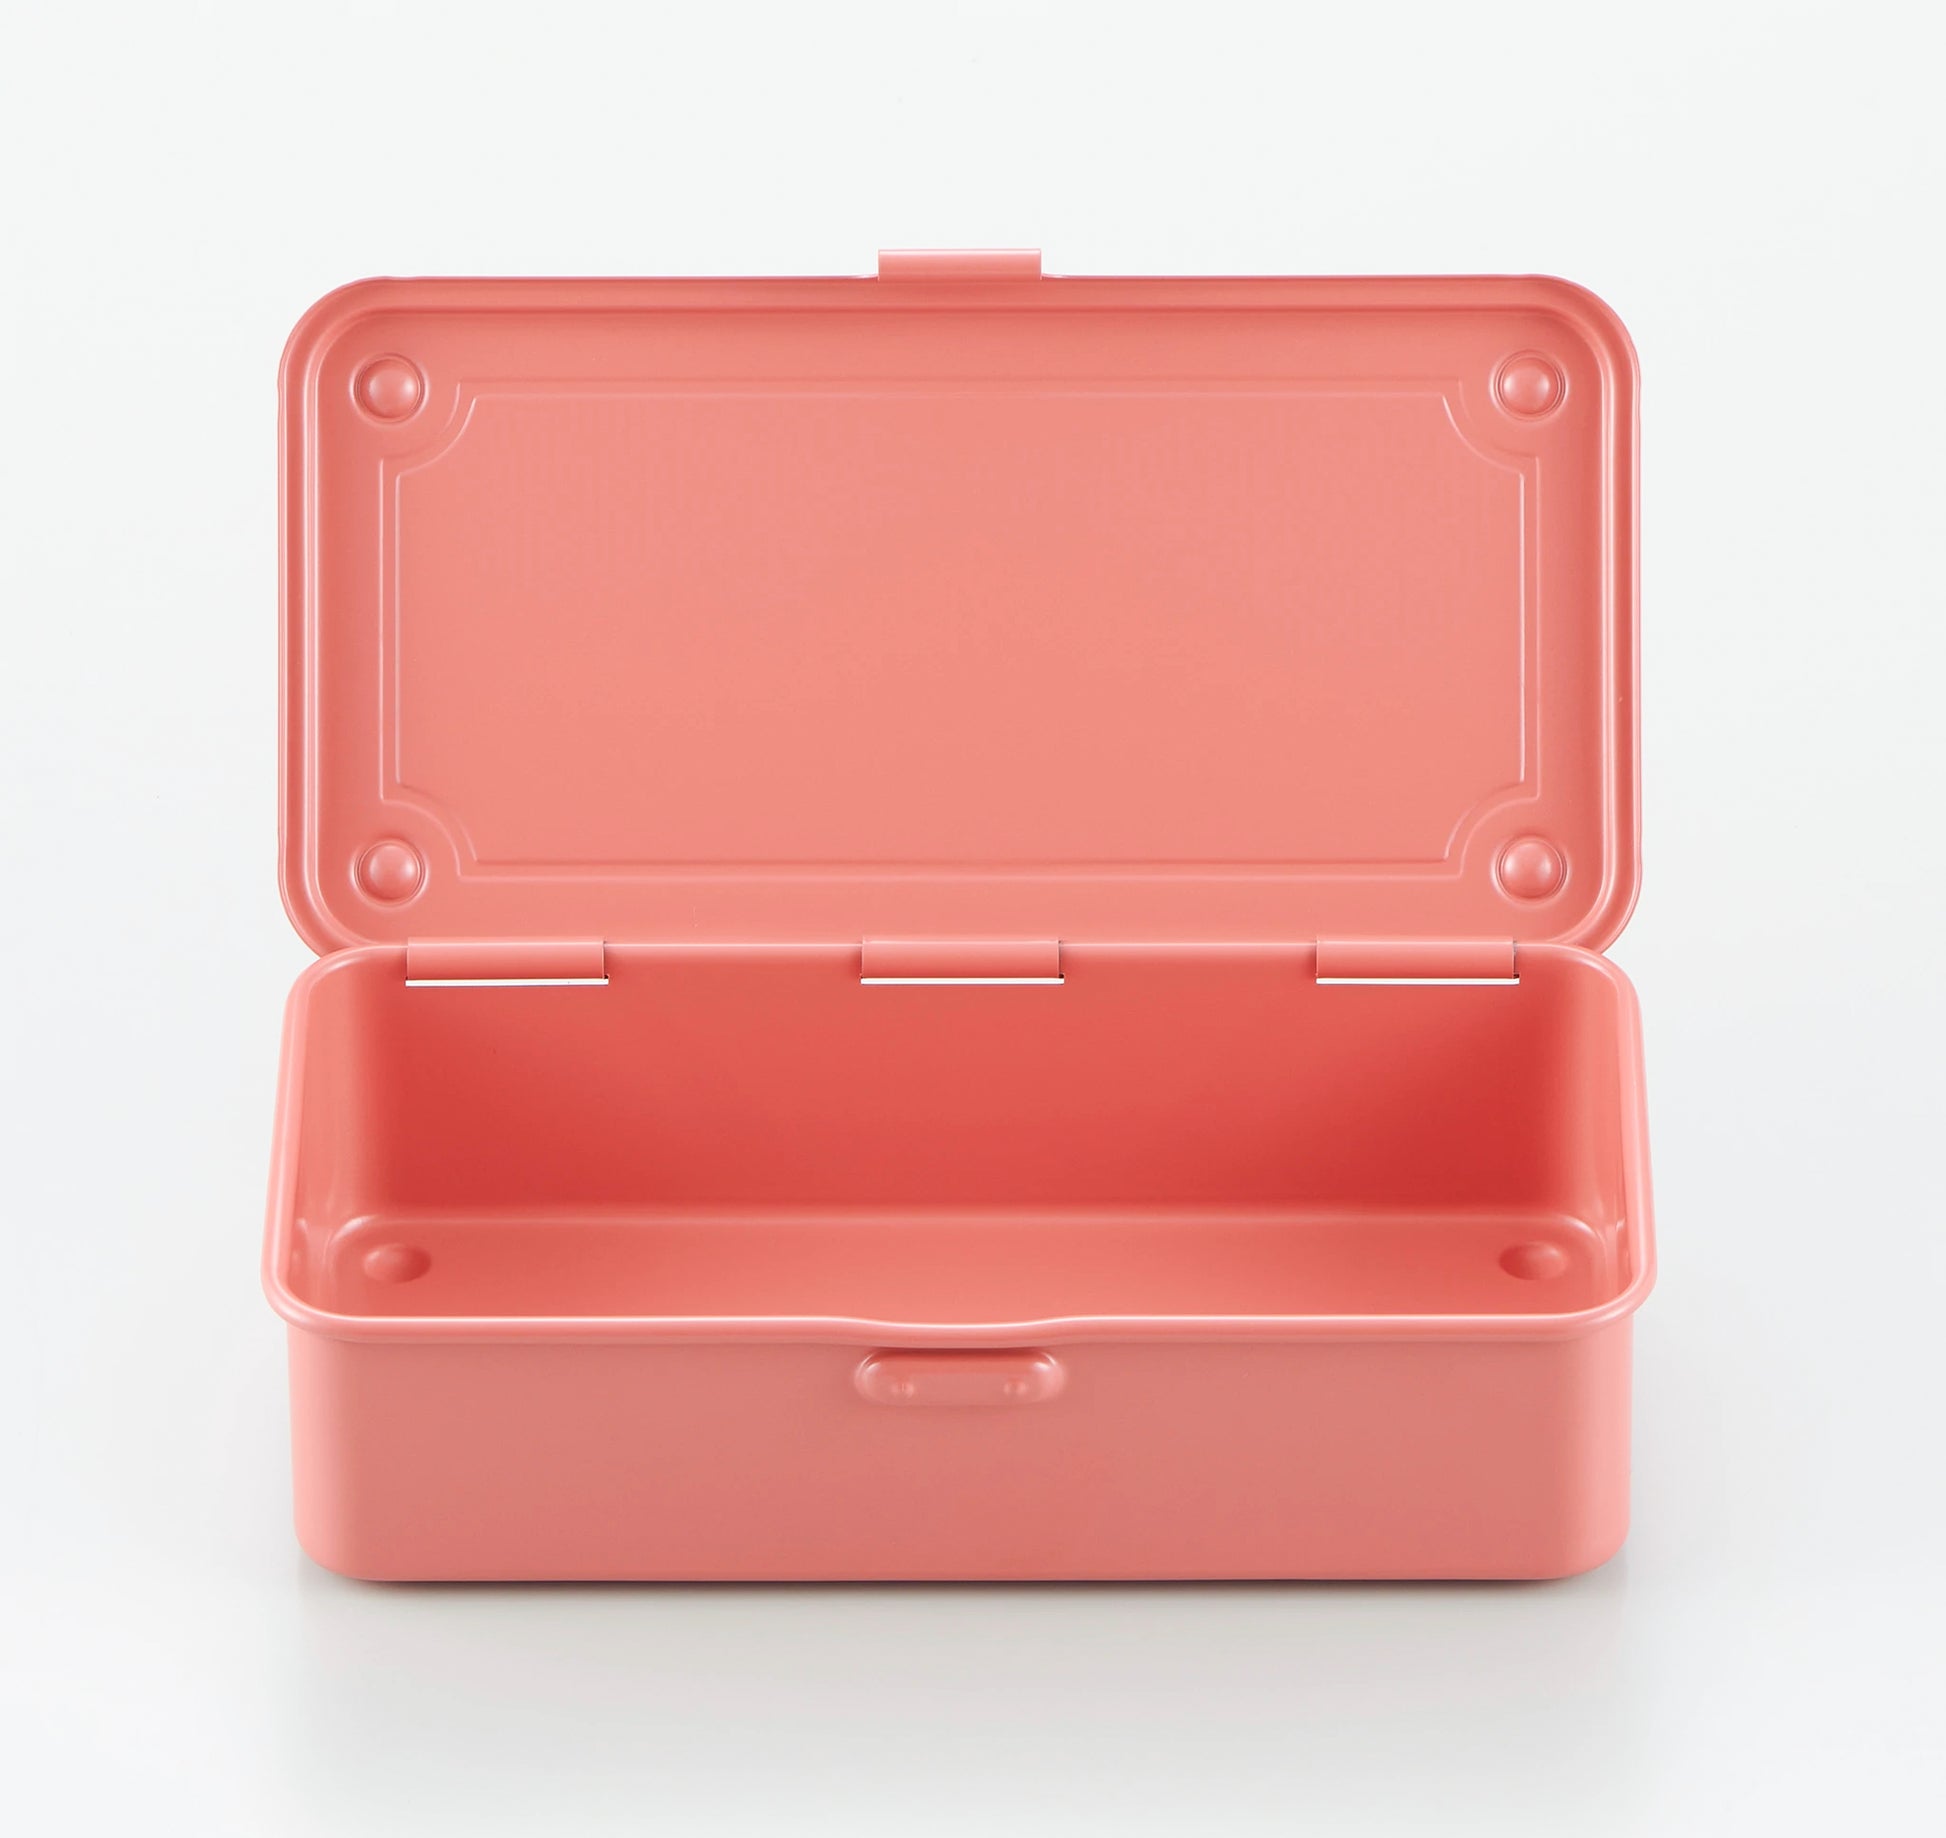 Coral Pink Mini Tool Box by Toyo